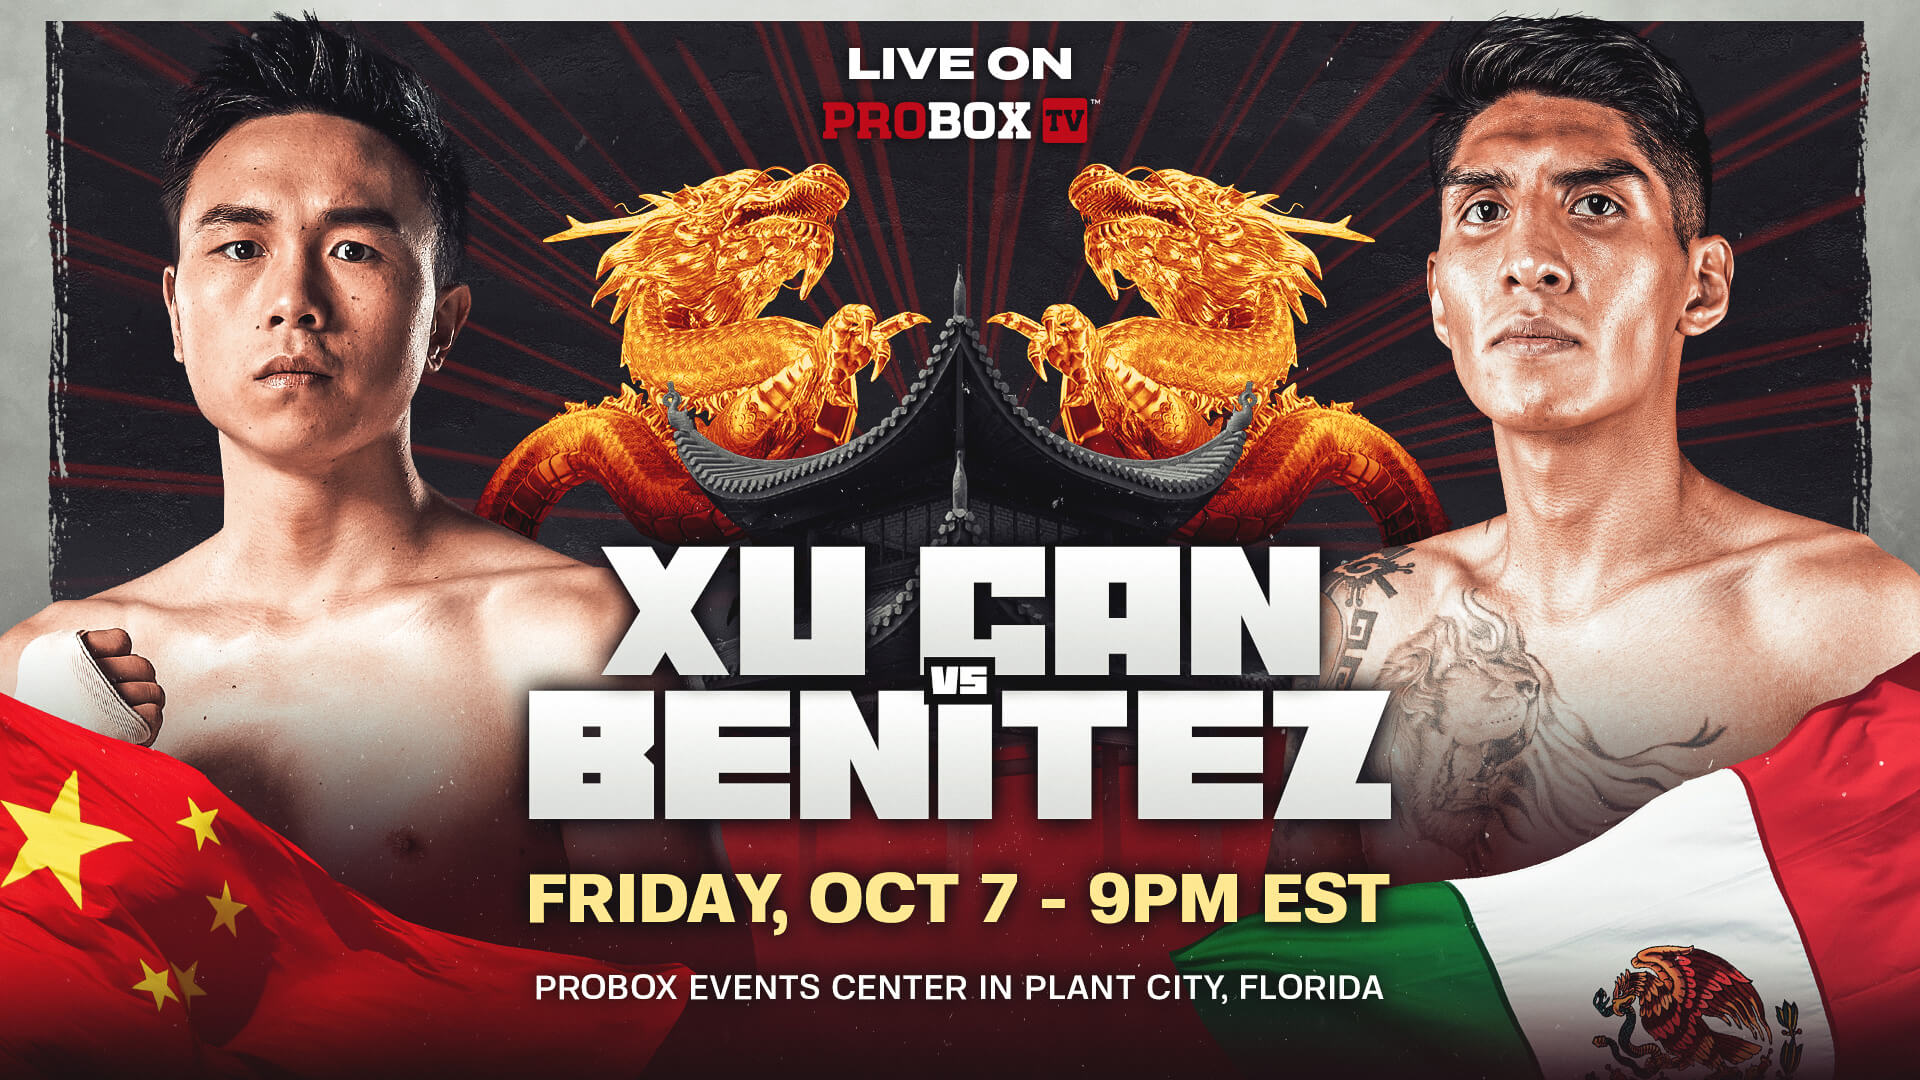 Xu Can vs Benitez,  October 7 at ProBox Event Center in Plant City, Florida